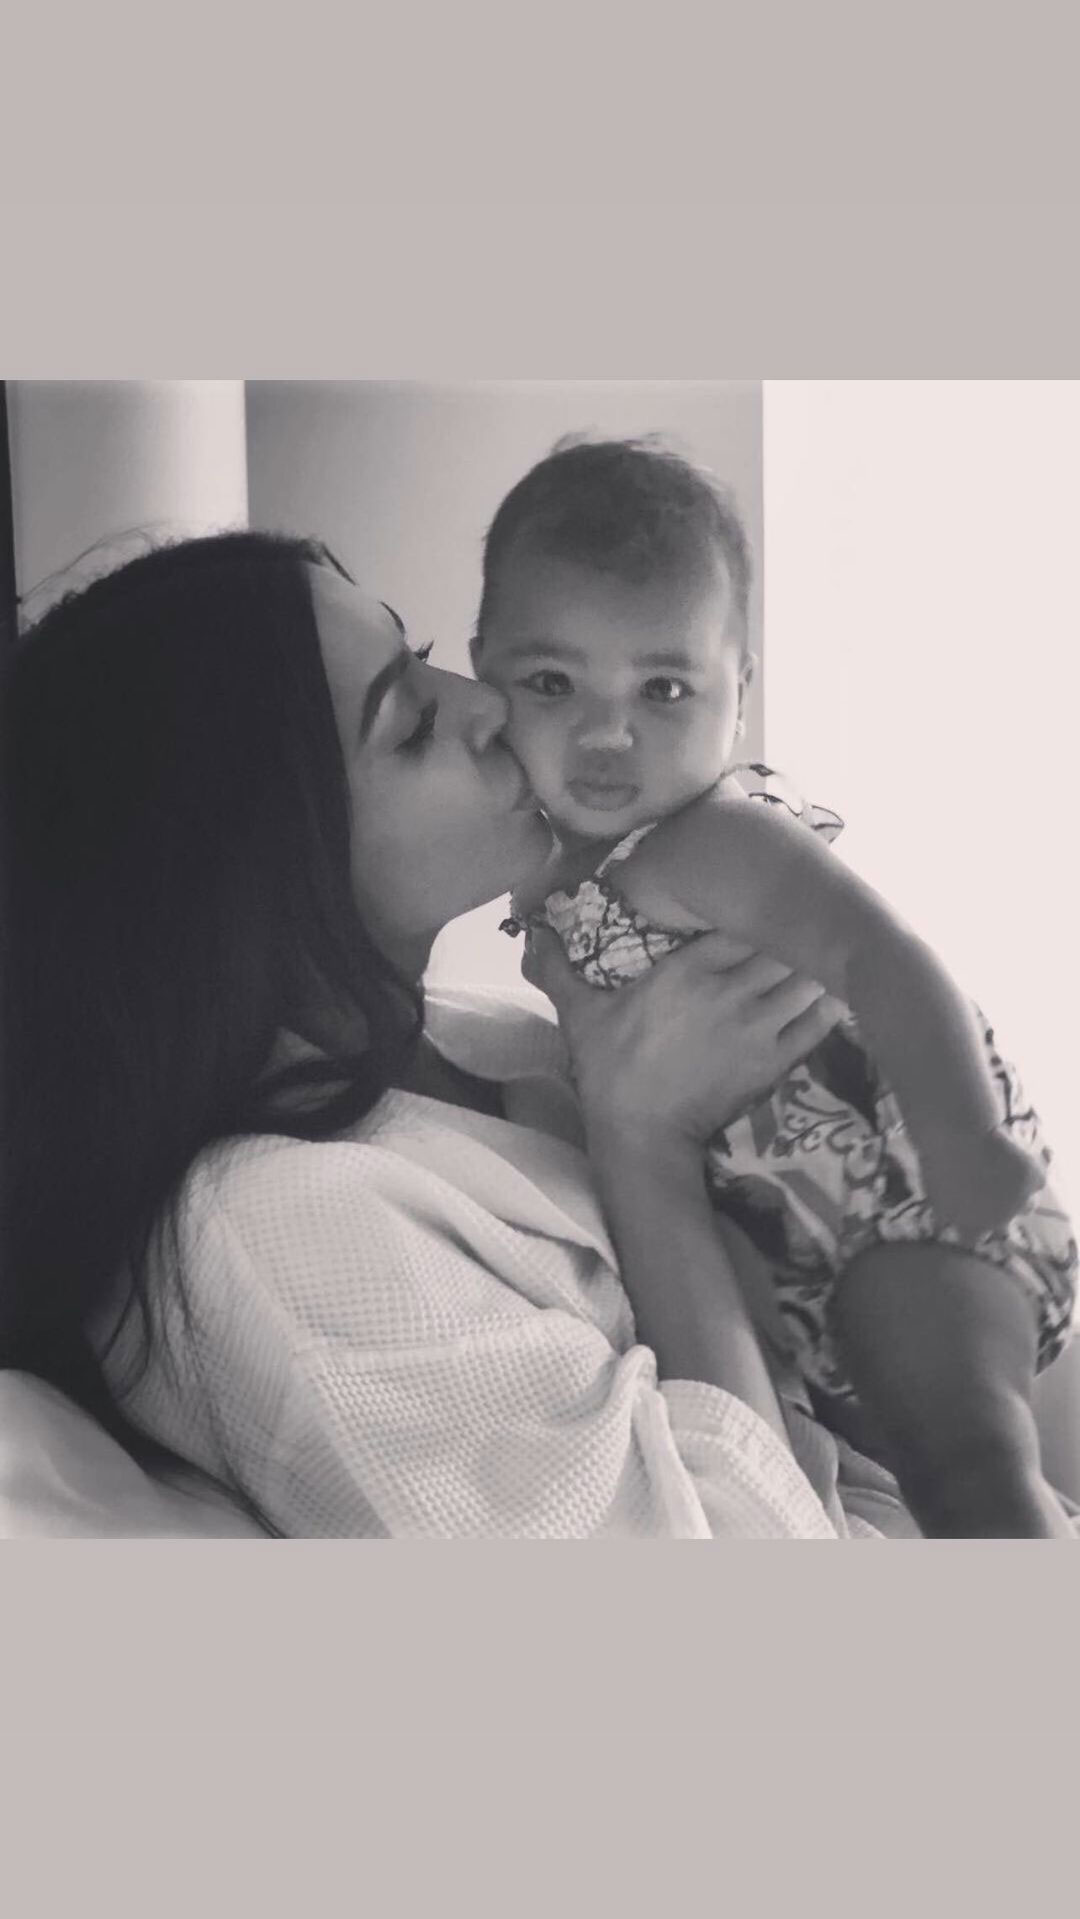 Khloe Kardashians Family Members Wish Her Daughter True a Happy 4th Birthday